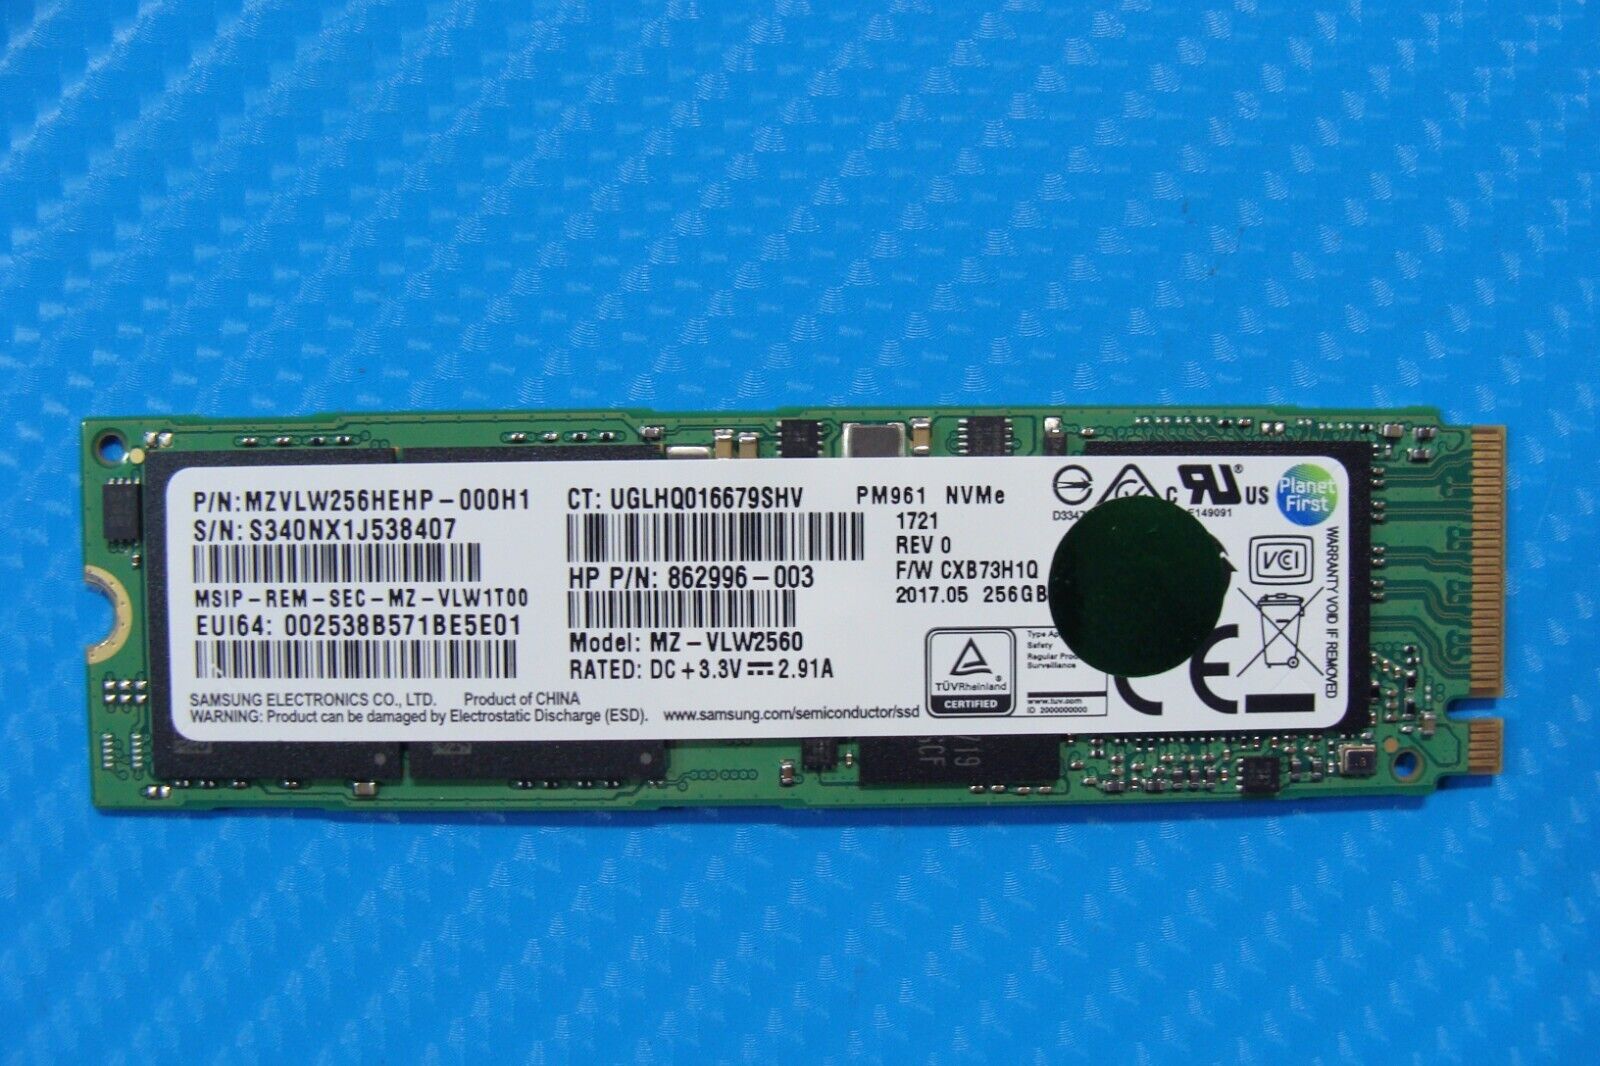 HP 1012 G2 Samsung 256GB NVMe M.2 SSD Solid State Drive MZVLW256HEHP-000H1